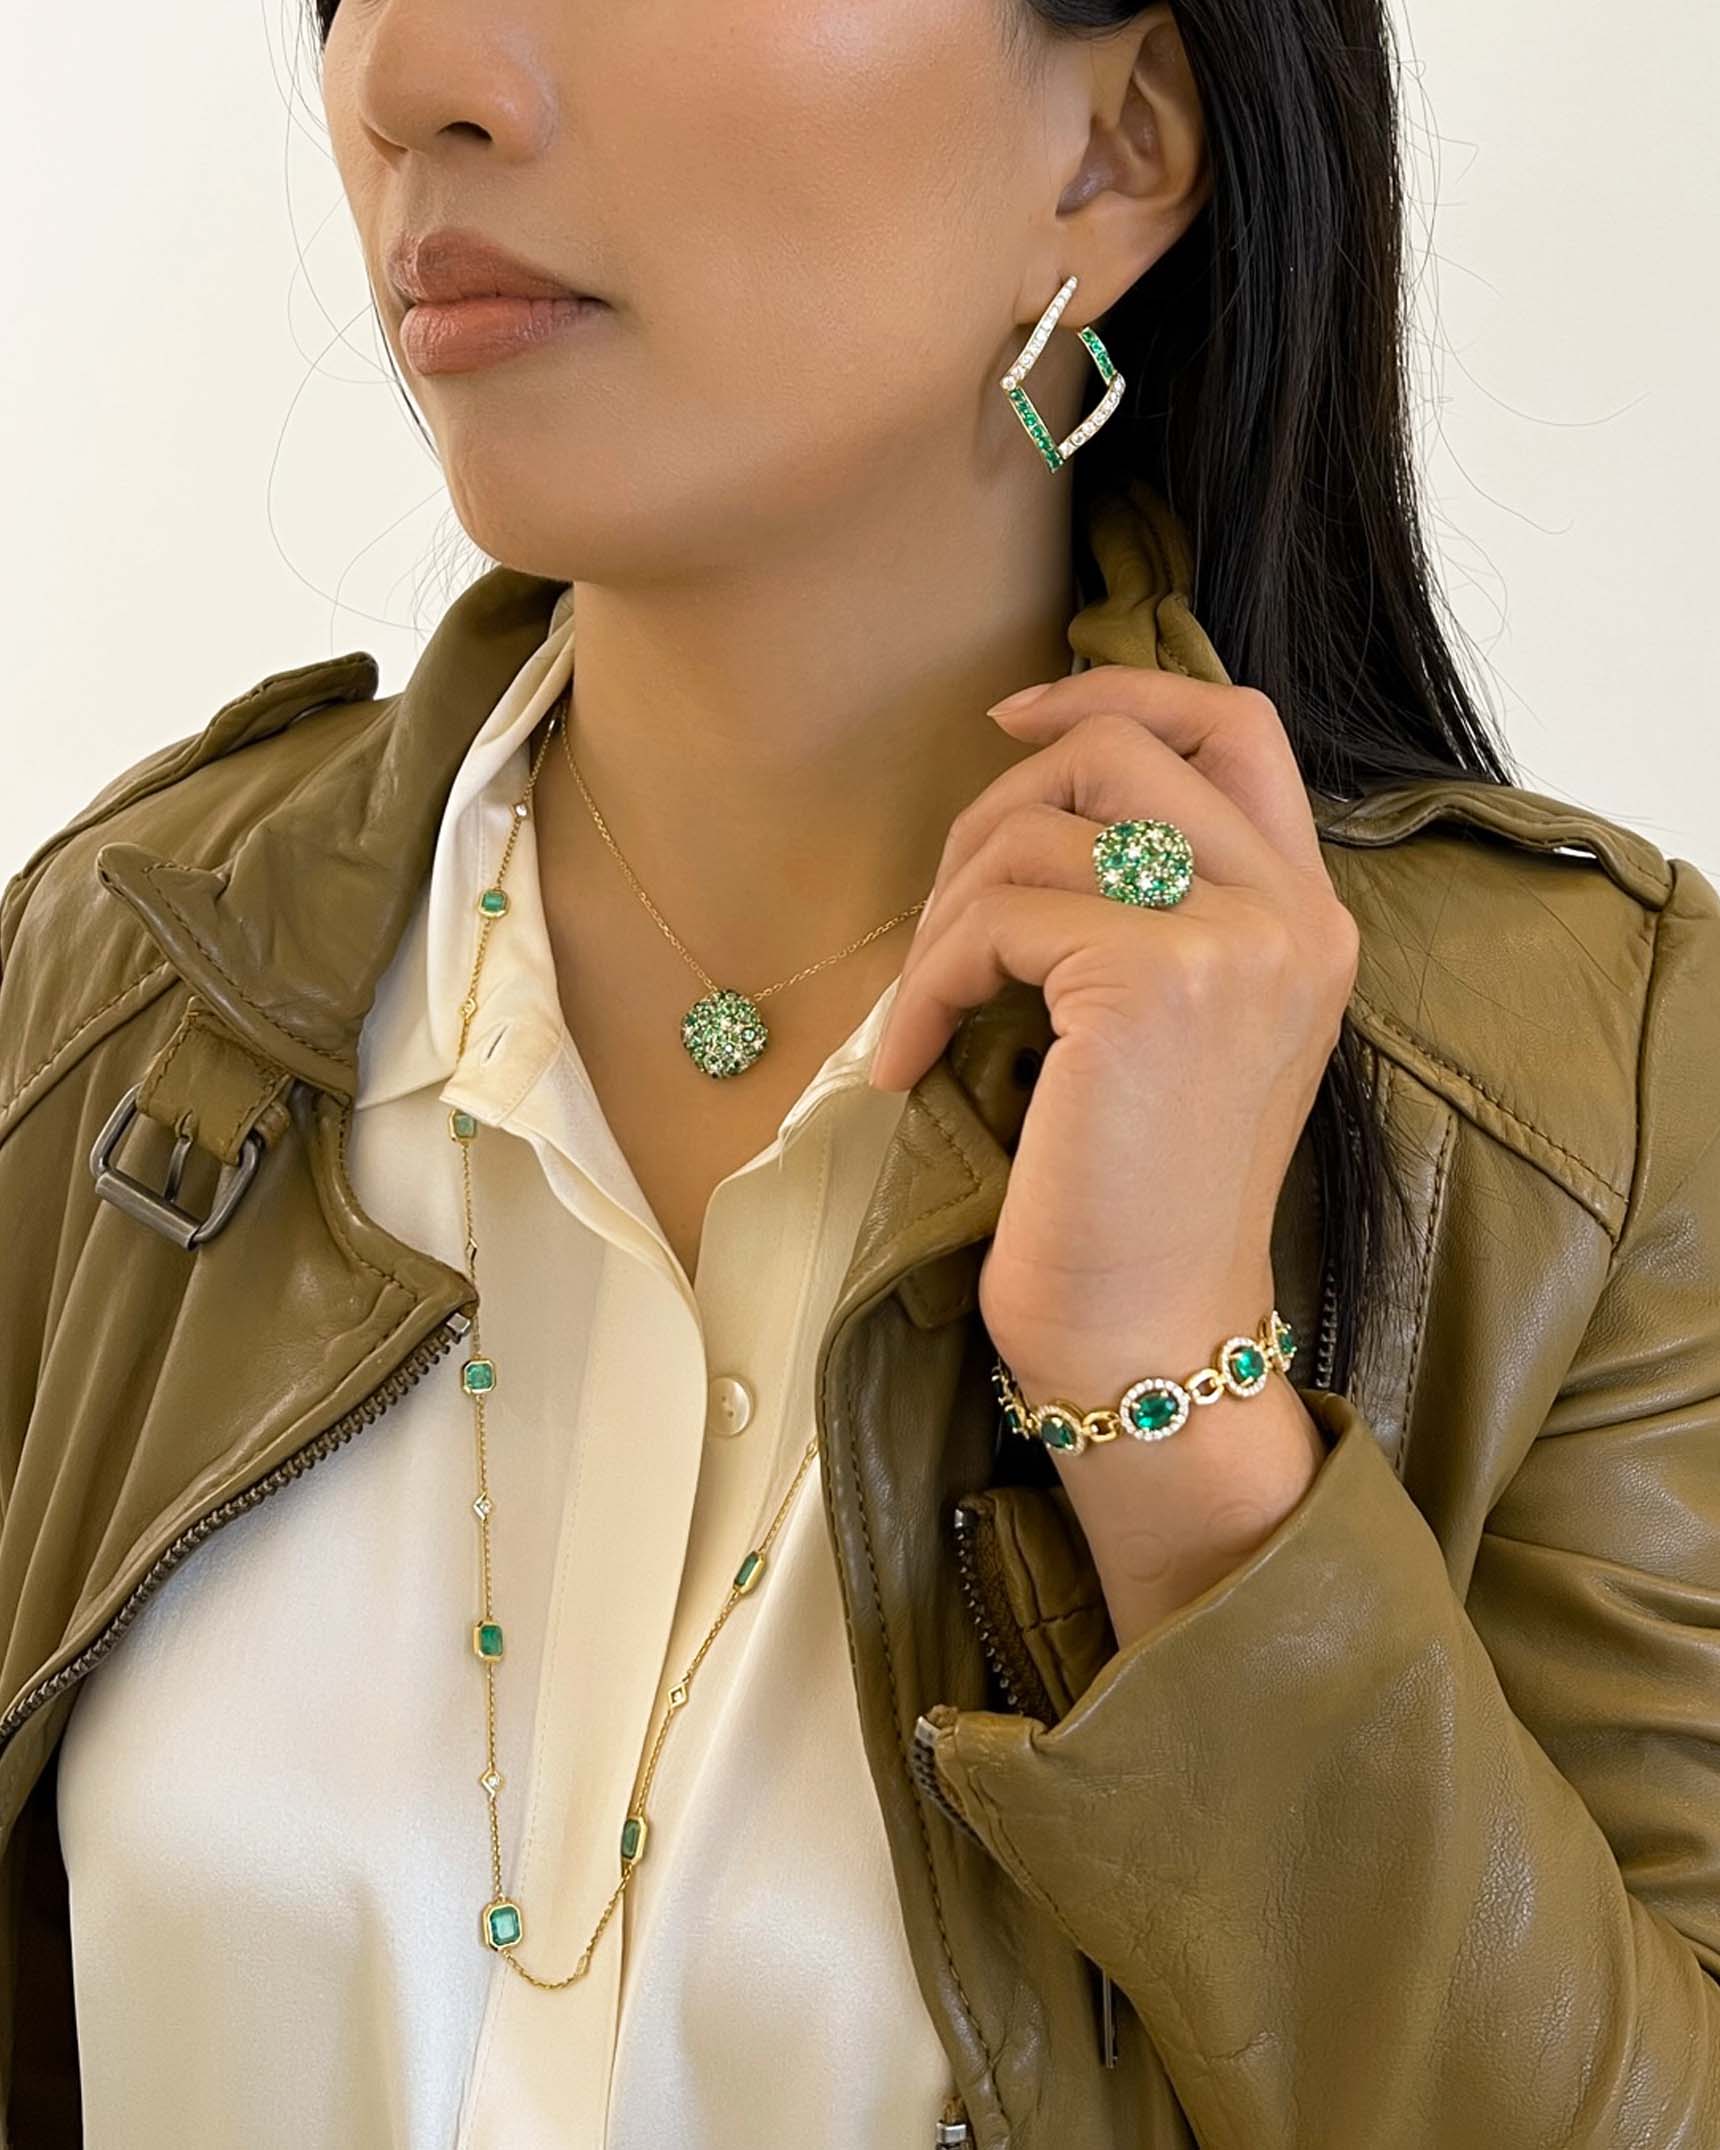 Emerald Jewelry V2 ECDKK03169 – NCOTK01651 – PNC6K01955 – RCMS03374 – BCDKK02543